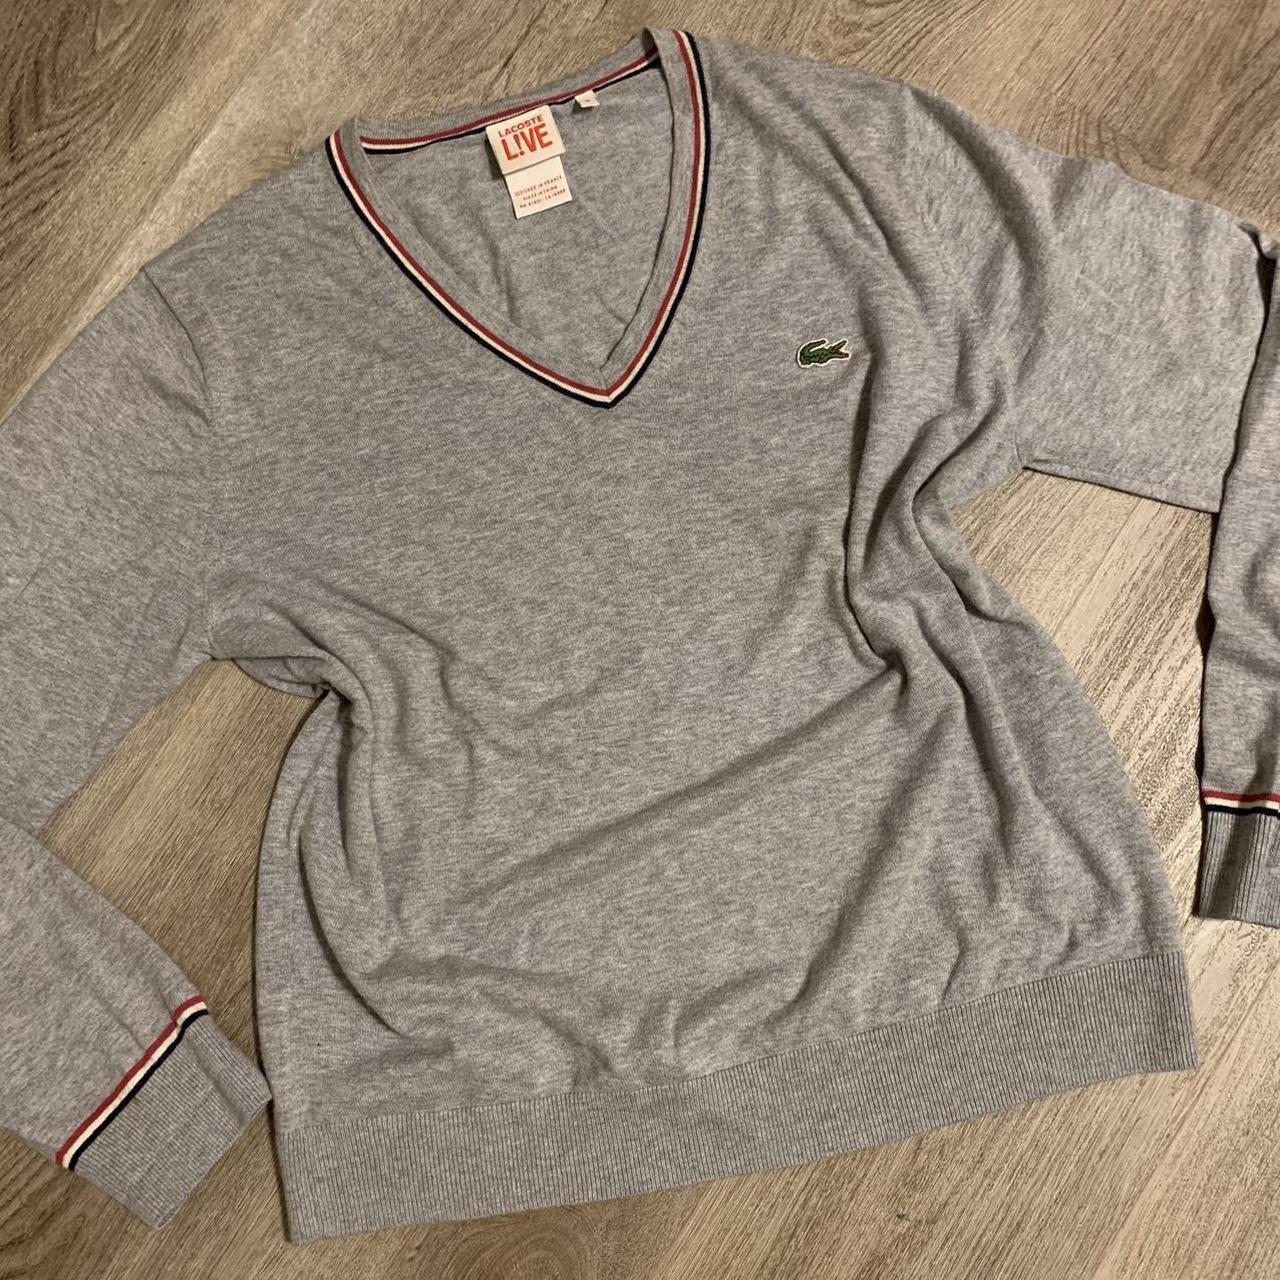 Lacoste Live Women's Grey Shirt (2)